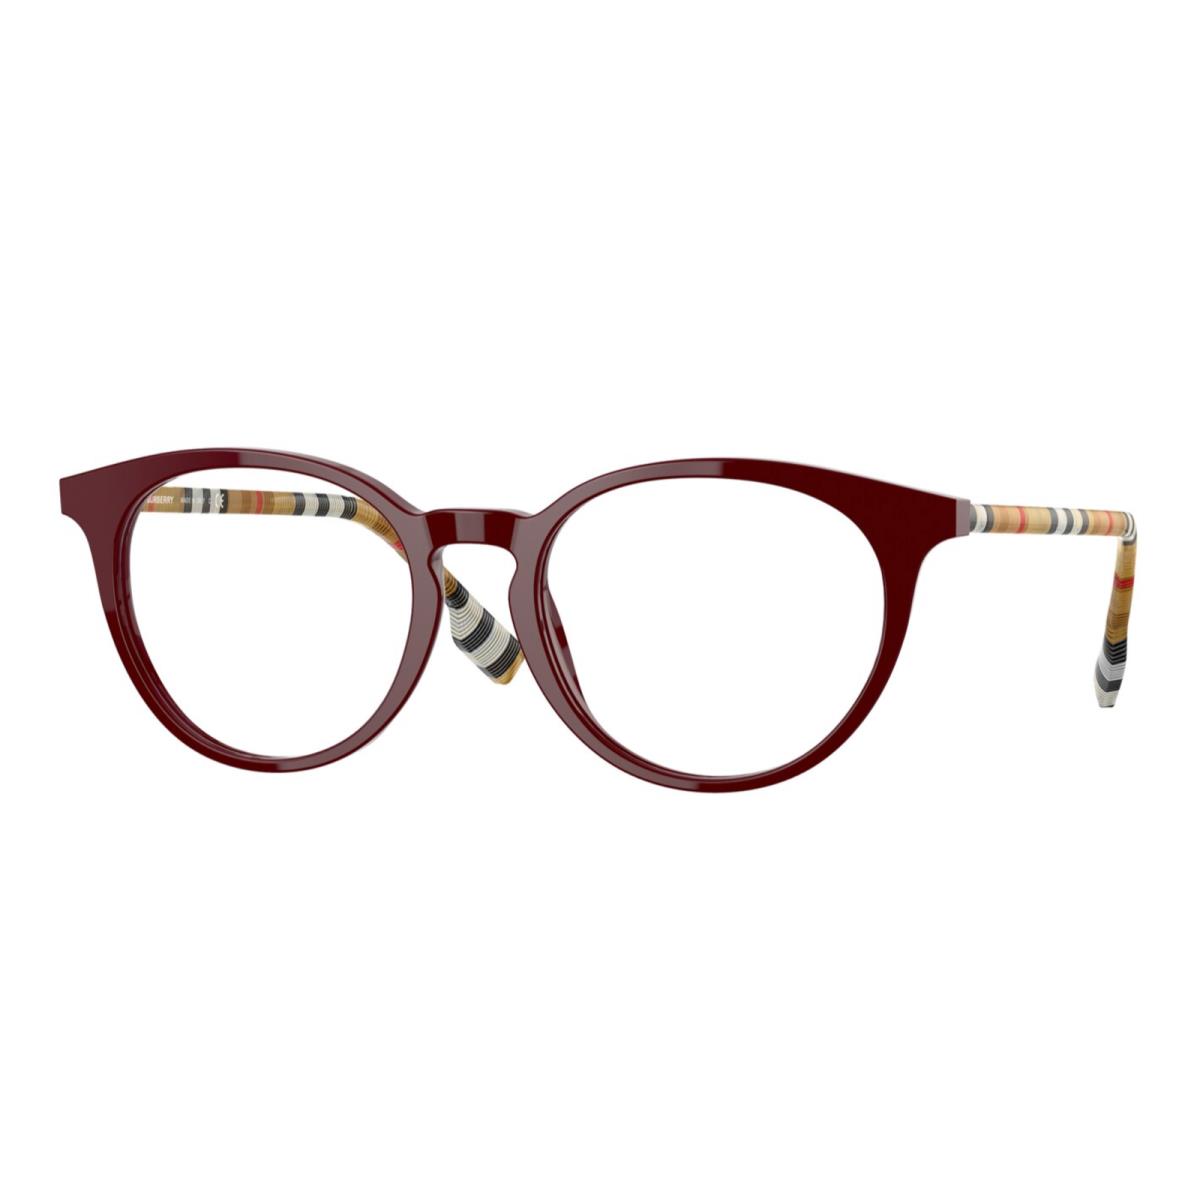 Burberry Eyeglasses B 2318 3916 51-18 Bordeaux Red Frames with Plaid Design